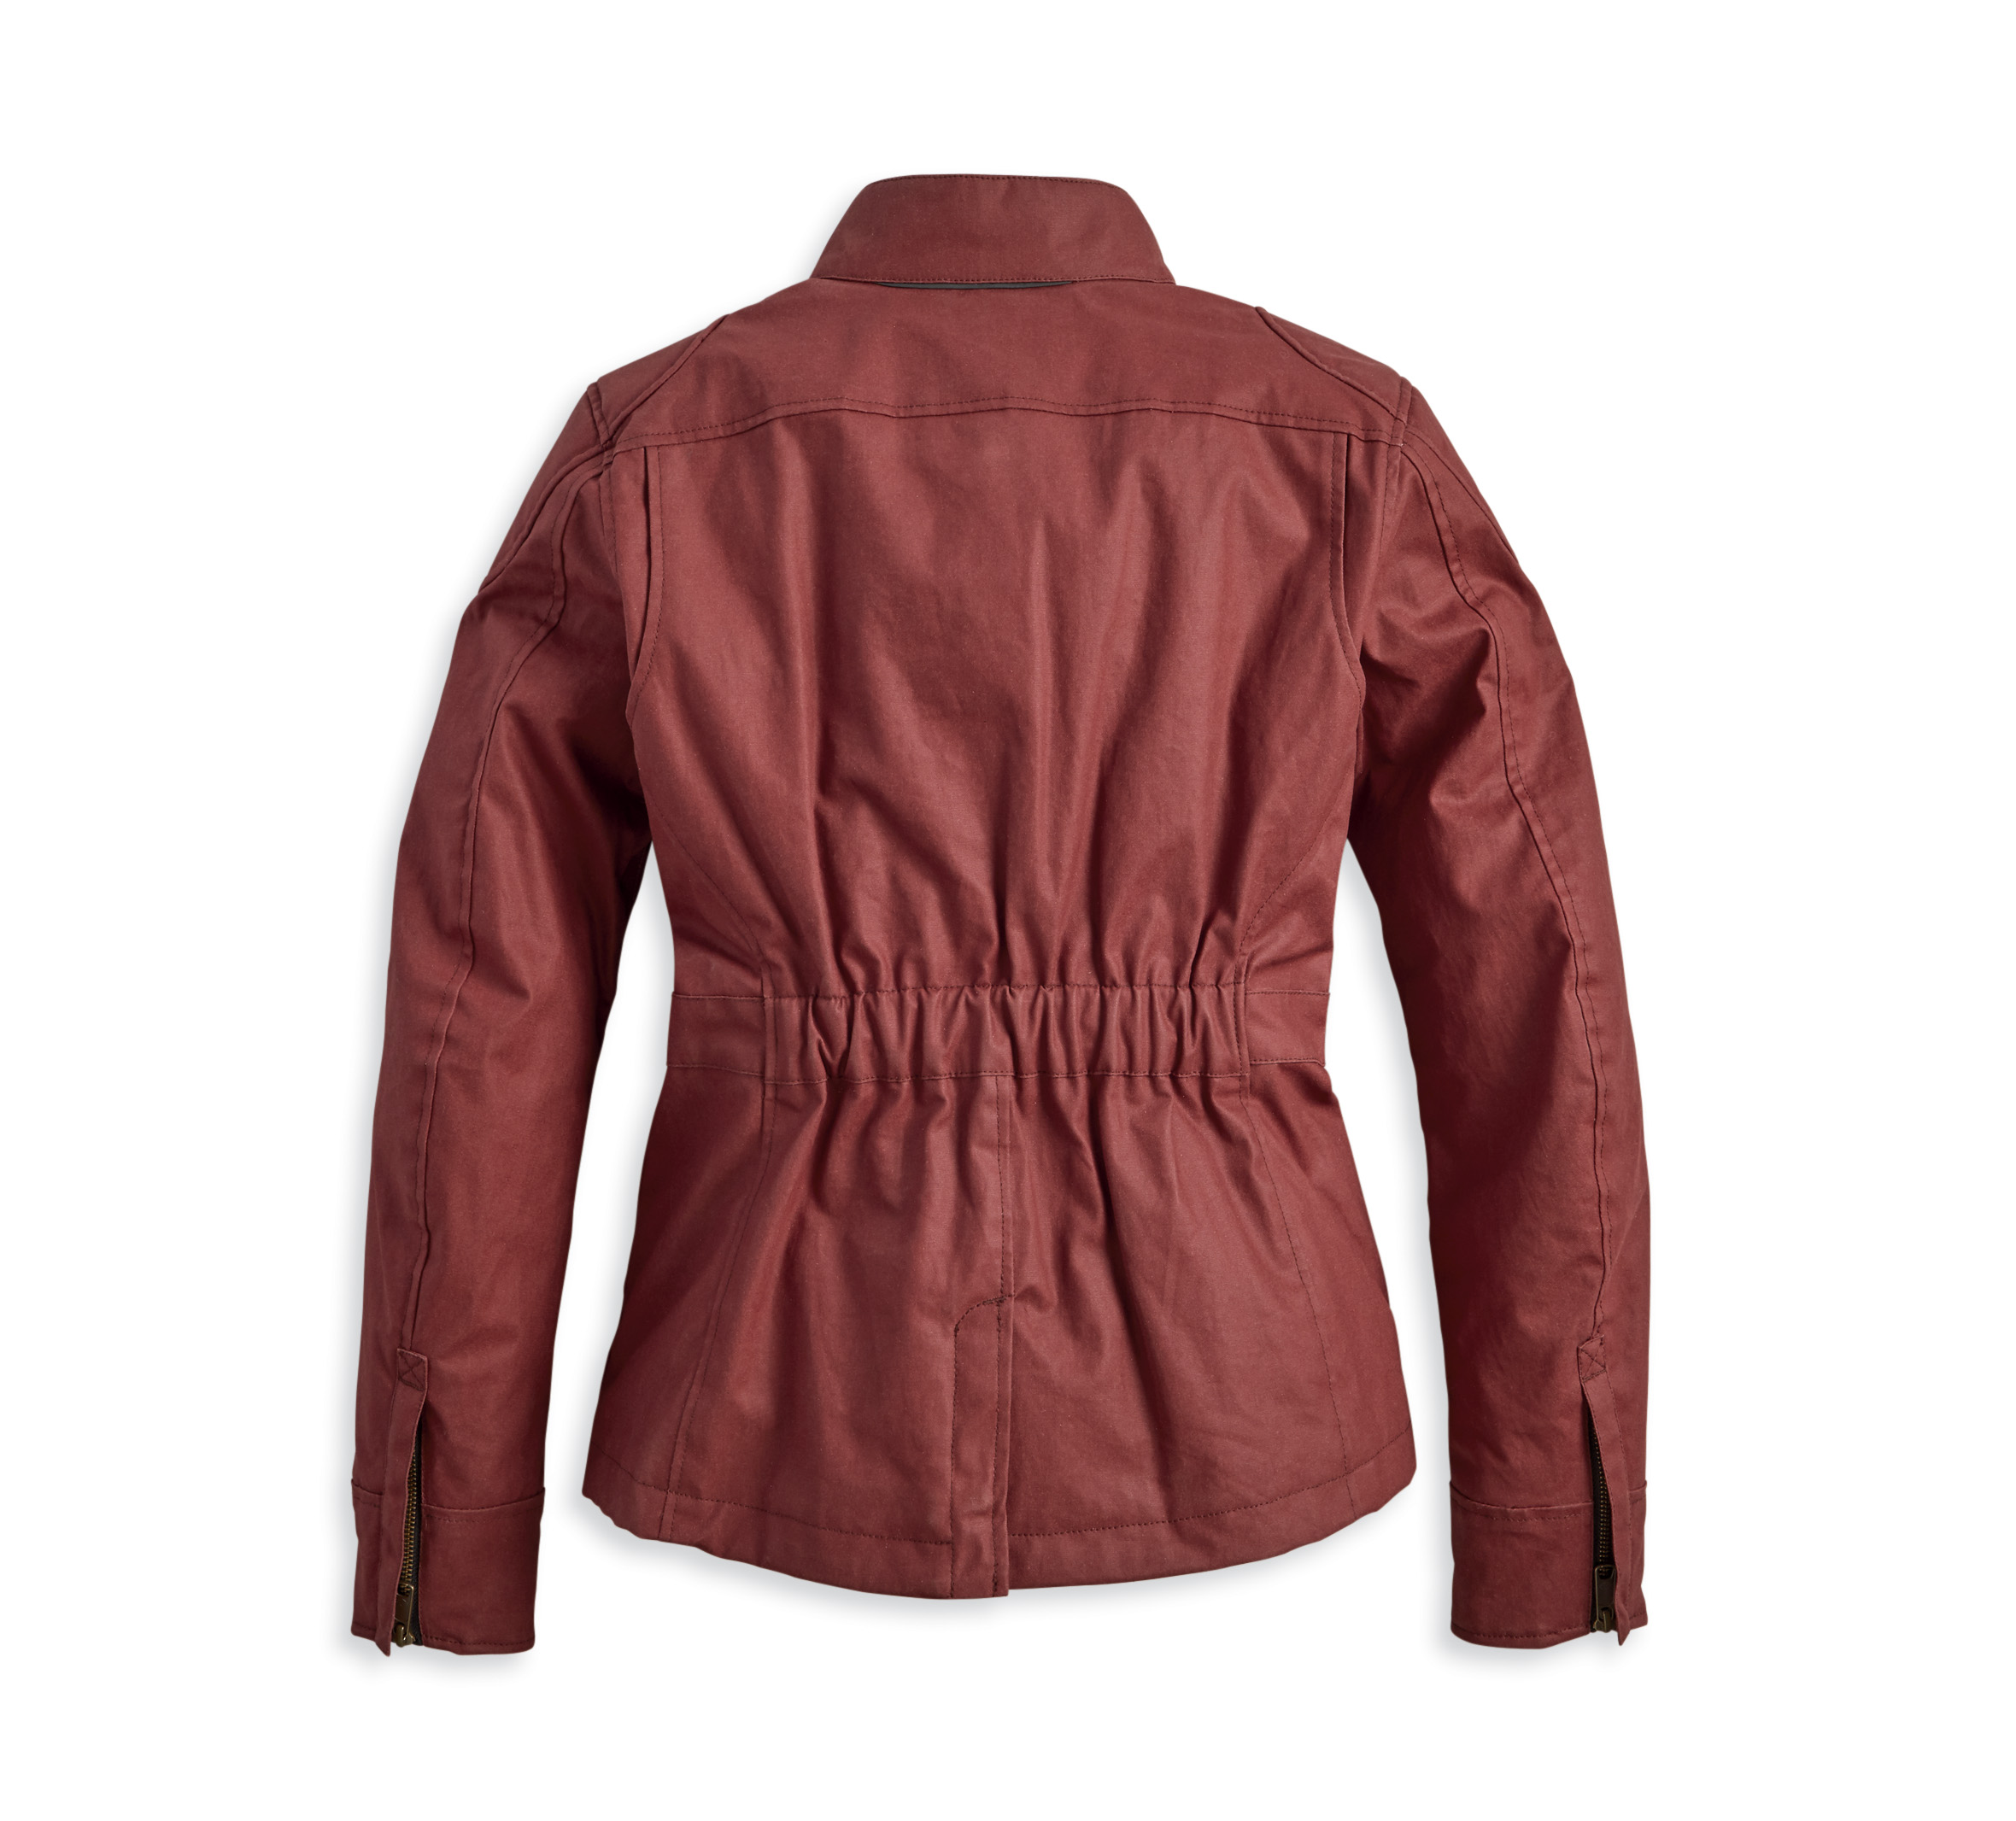 Women's Repose Textile Riding Jacket